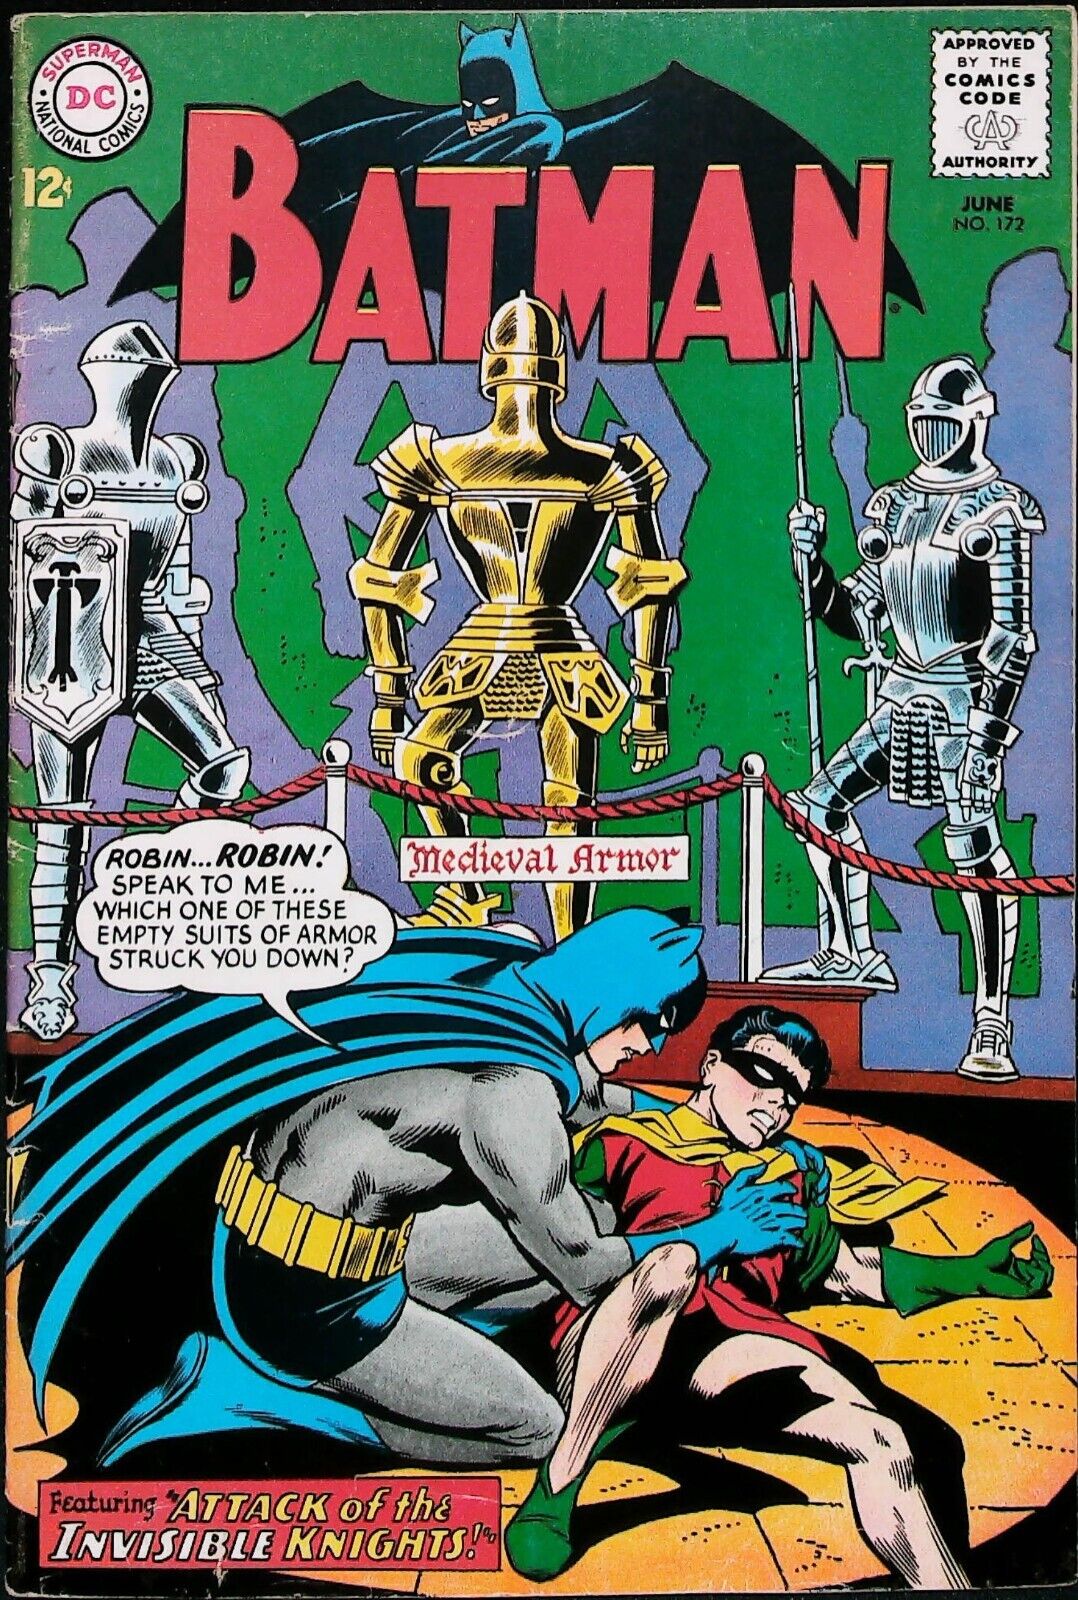 Batman #172 Volume 1 (1965) - Fine